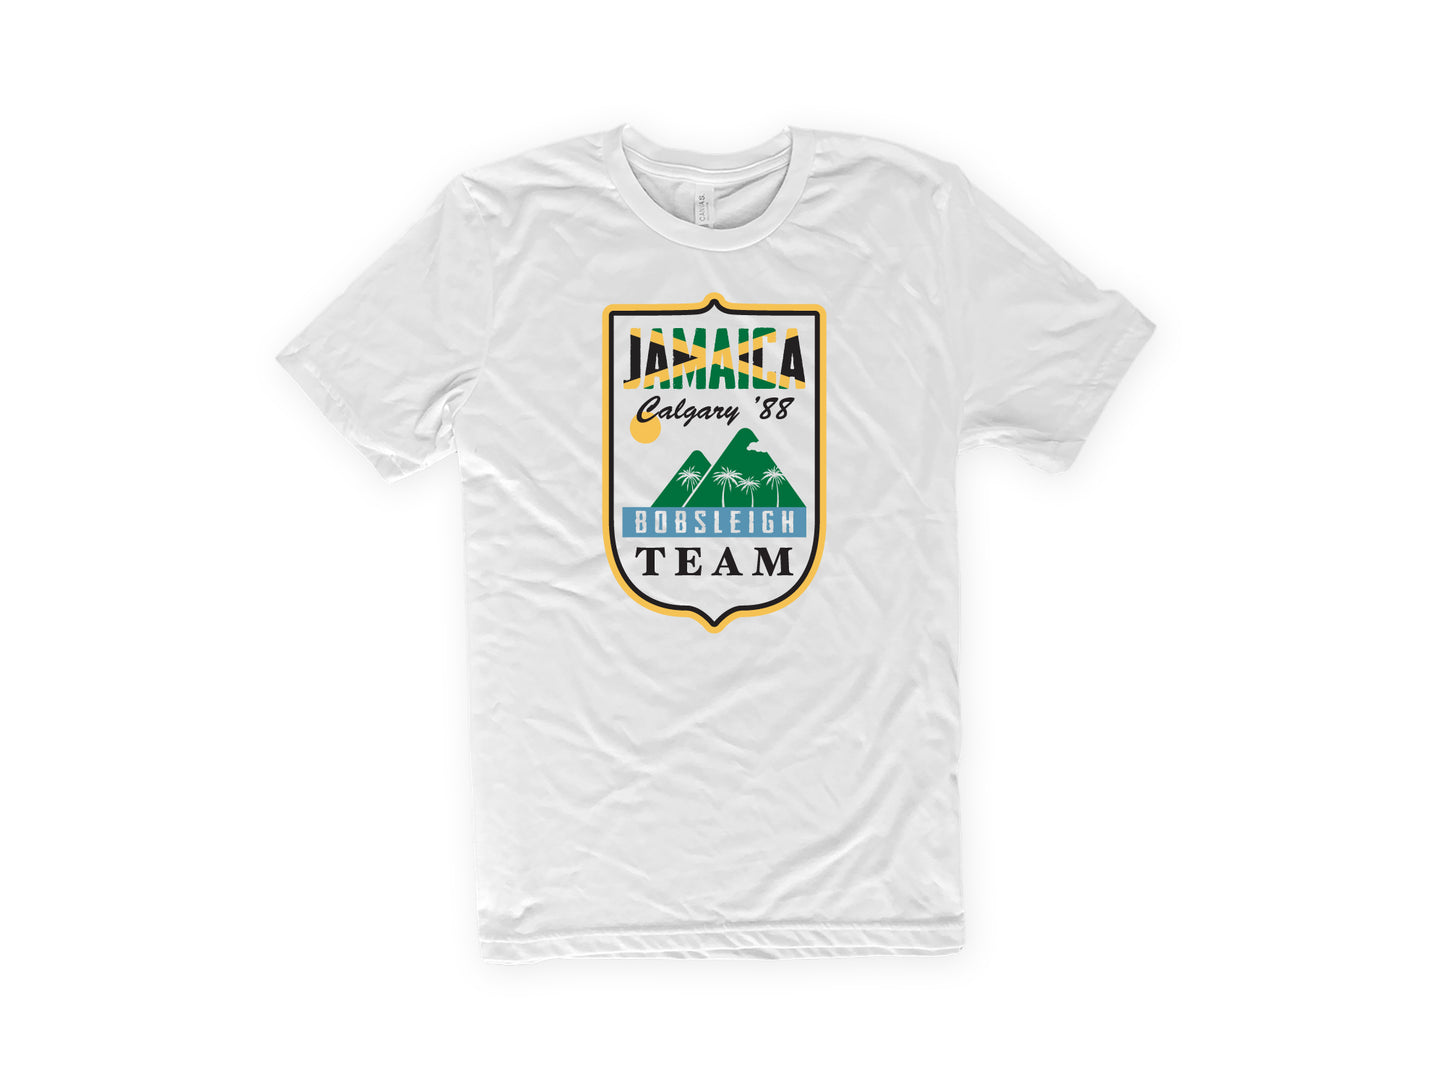 Cool Runnings Jamaica Bobsled Team 88' Calgary Olympics Vintage Shirt WHITE